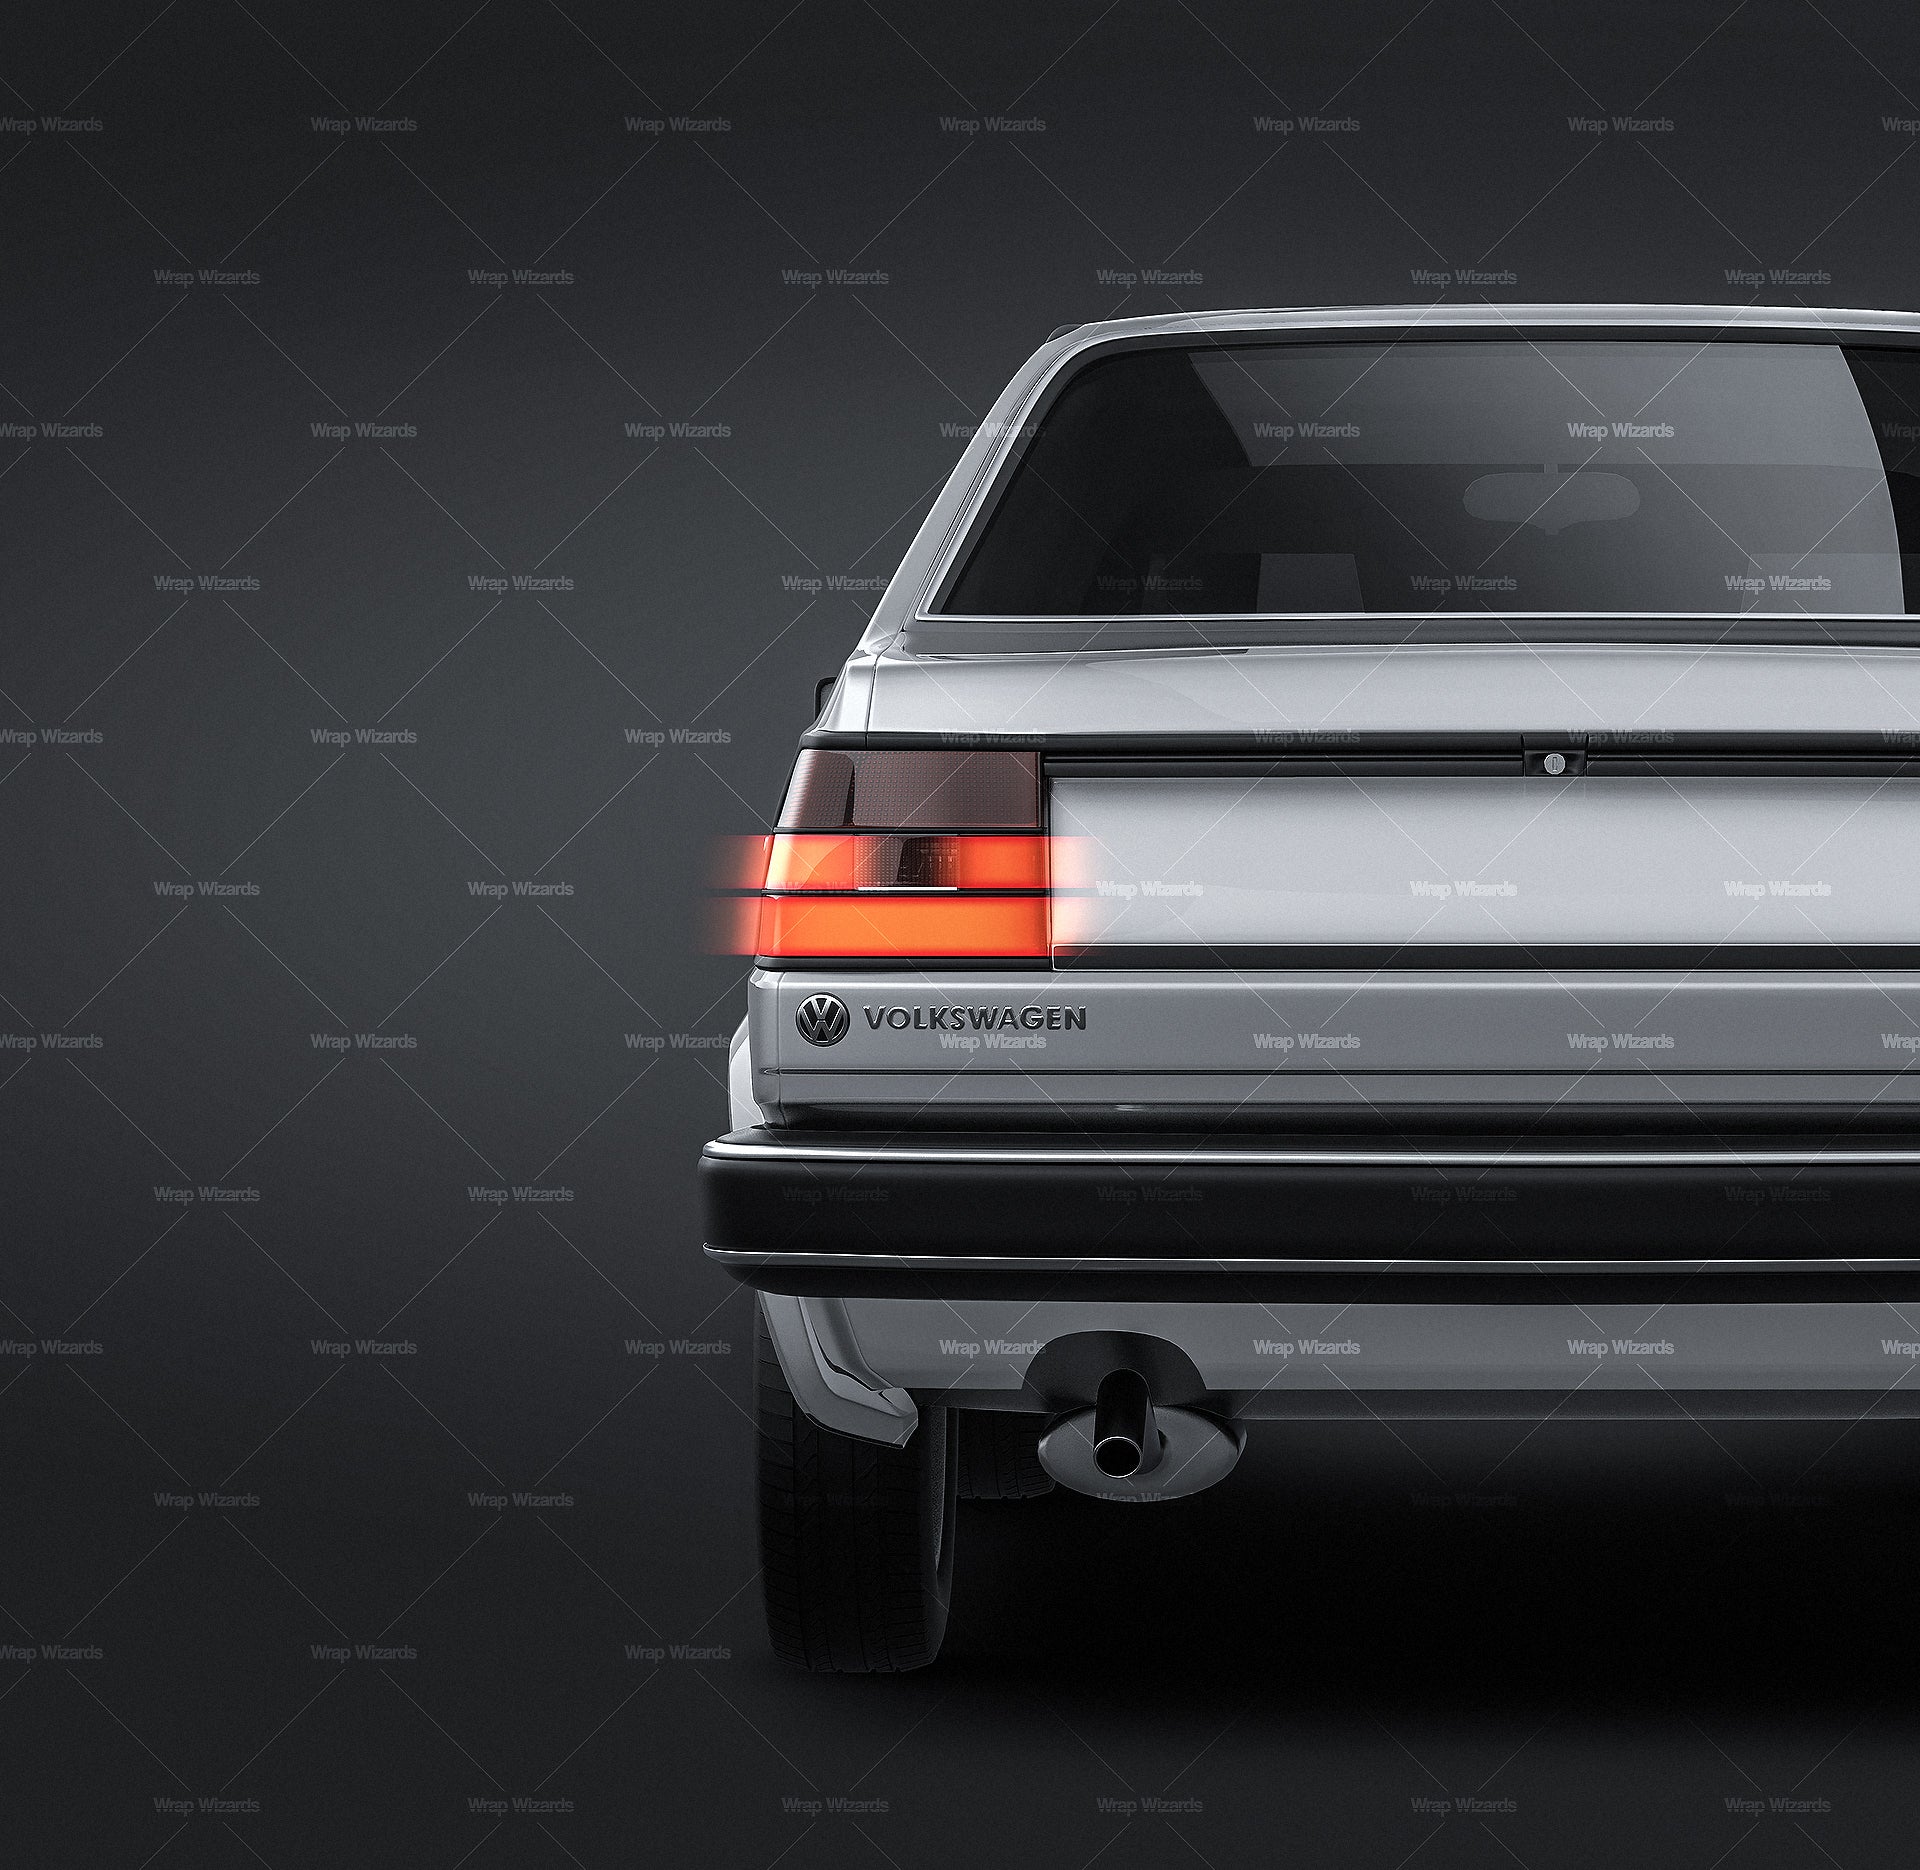 Volkswagen Jetta 1984 glossy finish - all sides Car Mockup Template.psd